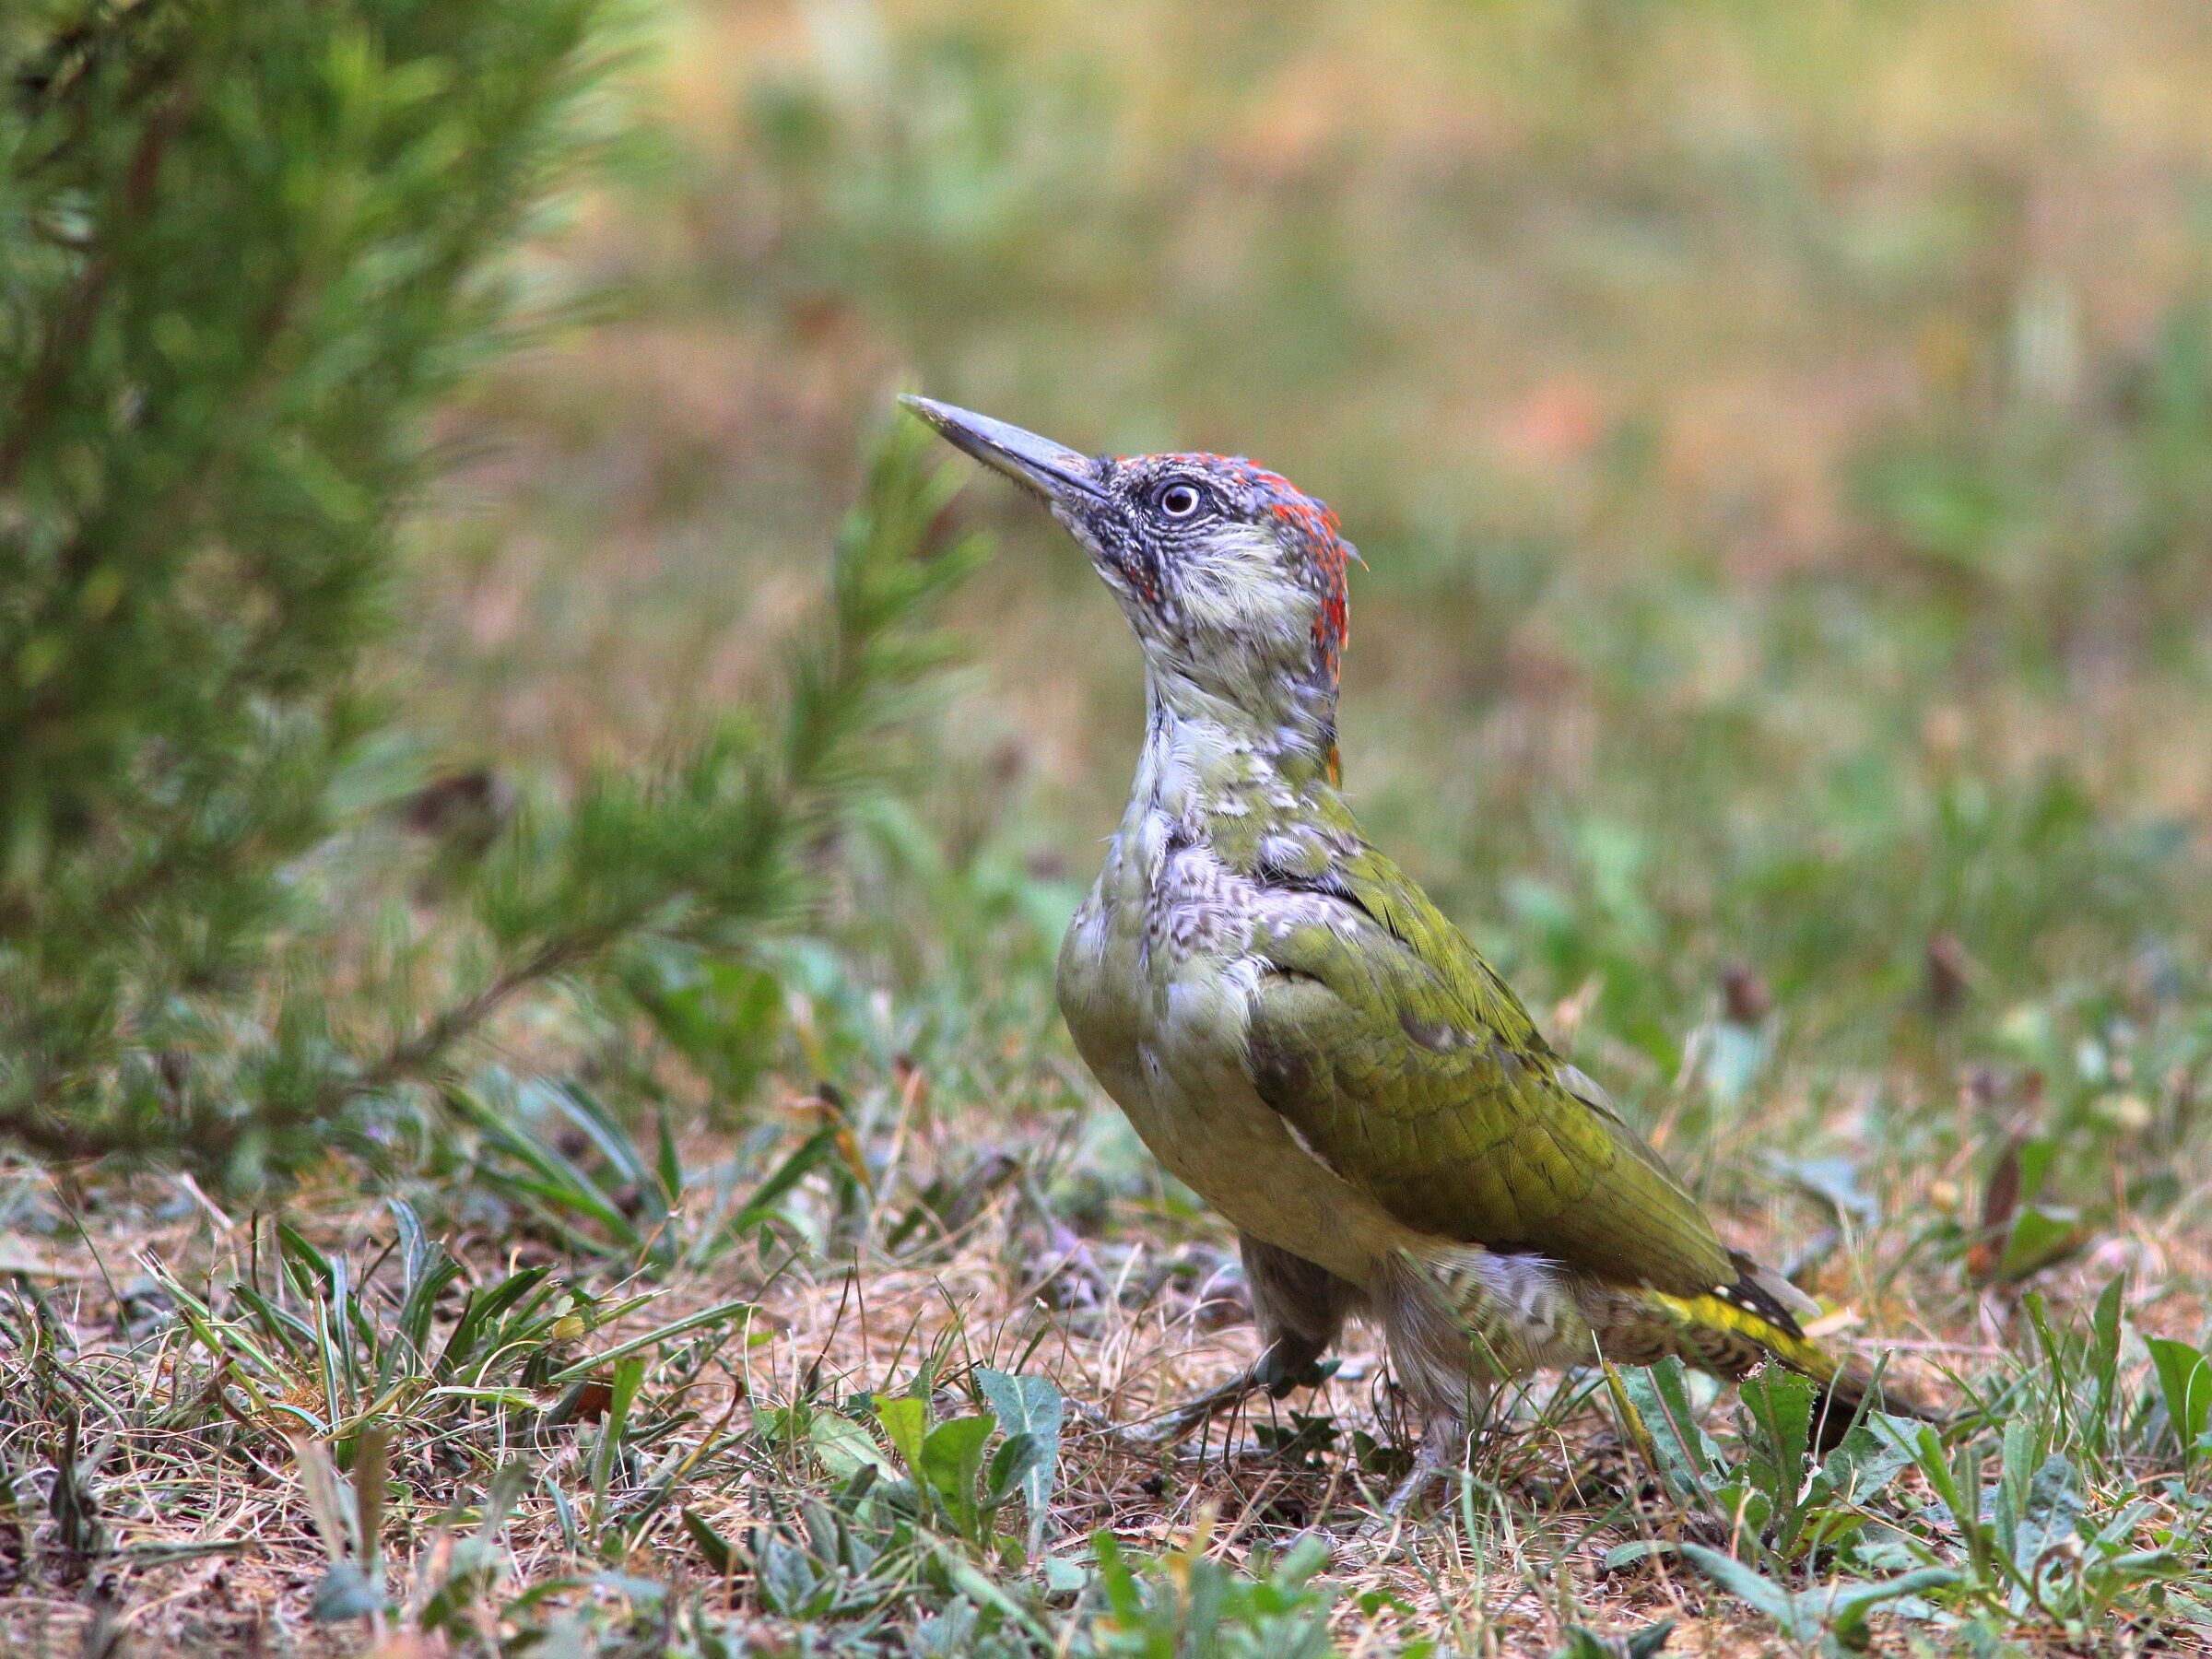 Picus viridis or green woodpecker...